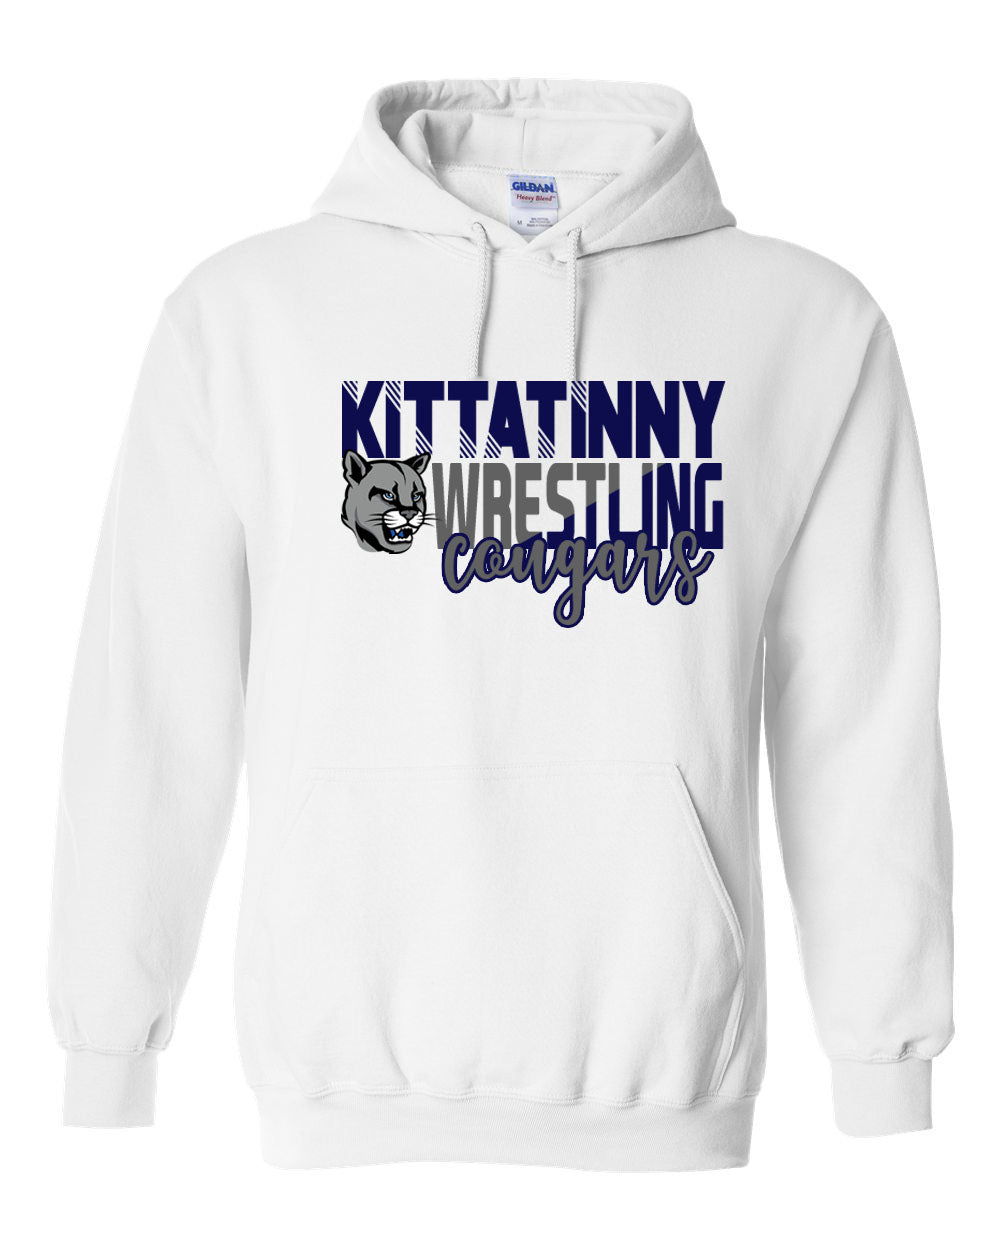 Kittatinny Wrestling Design 4 Hooded Sweatshirt